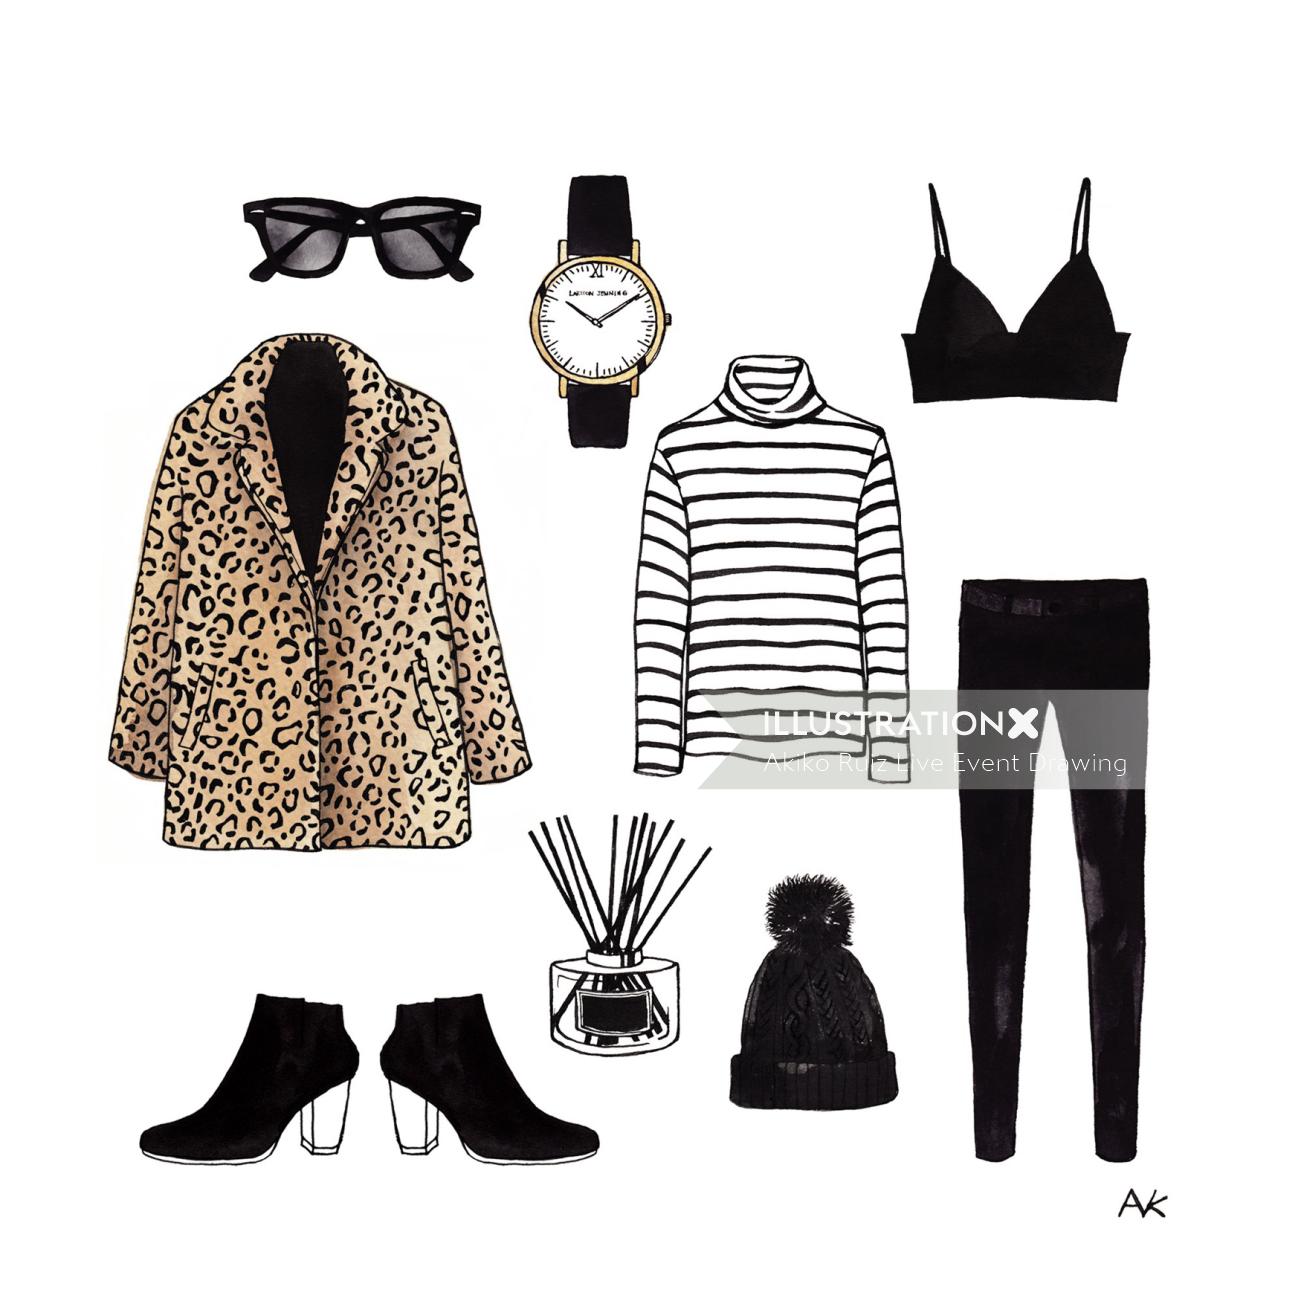 Leopard jacket outfit fashion illustration